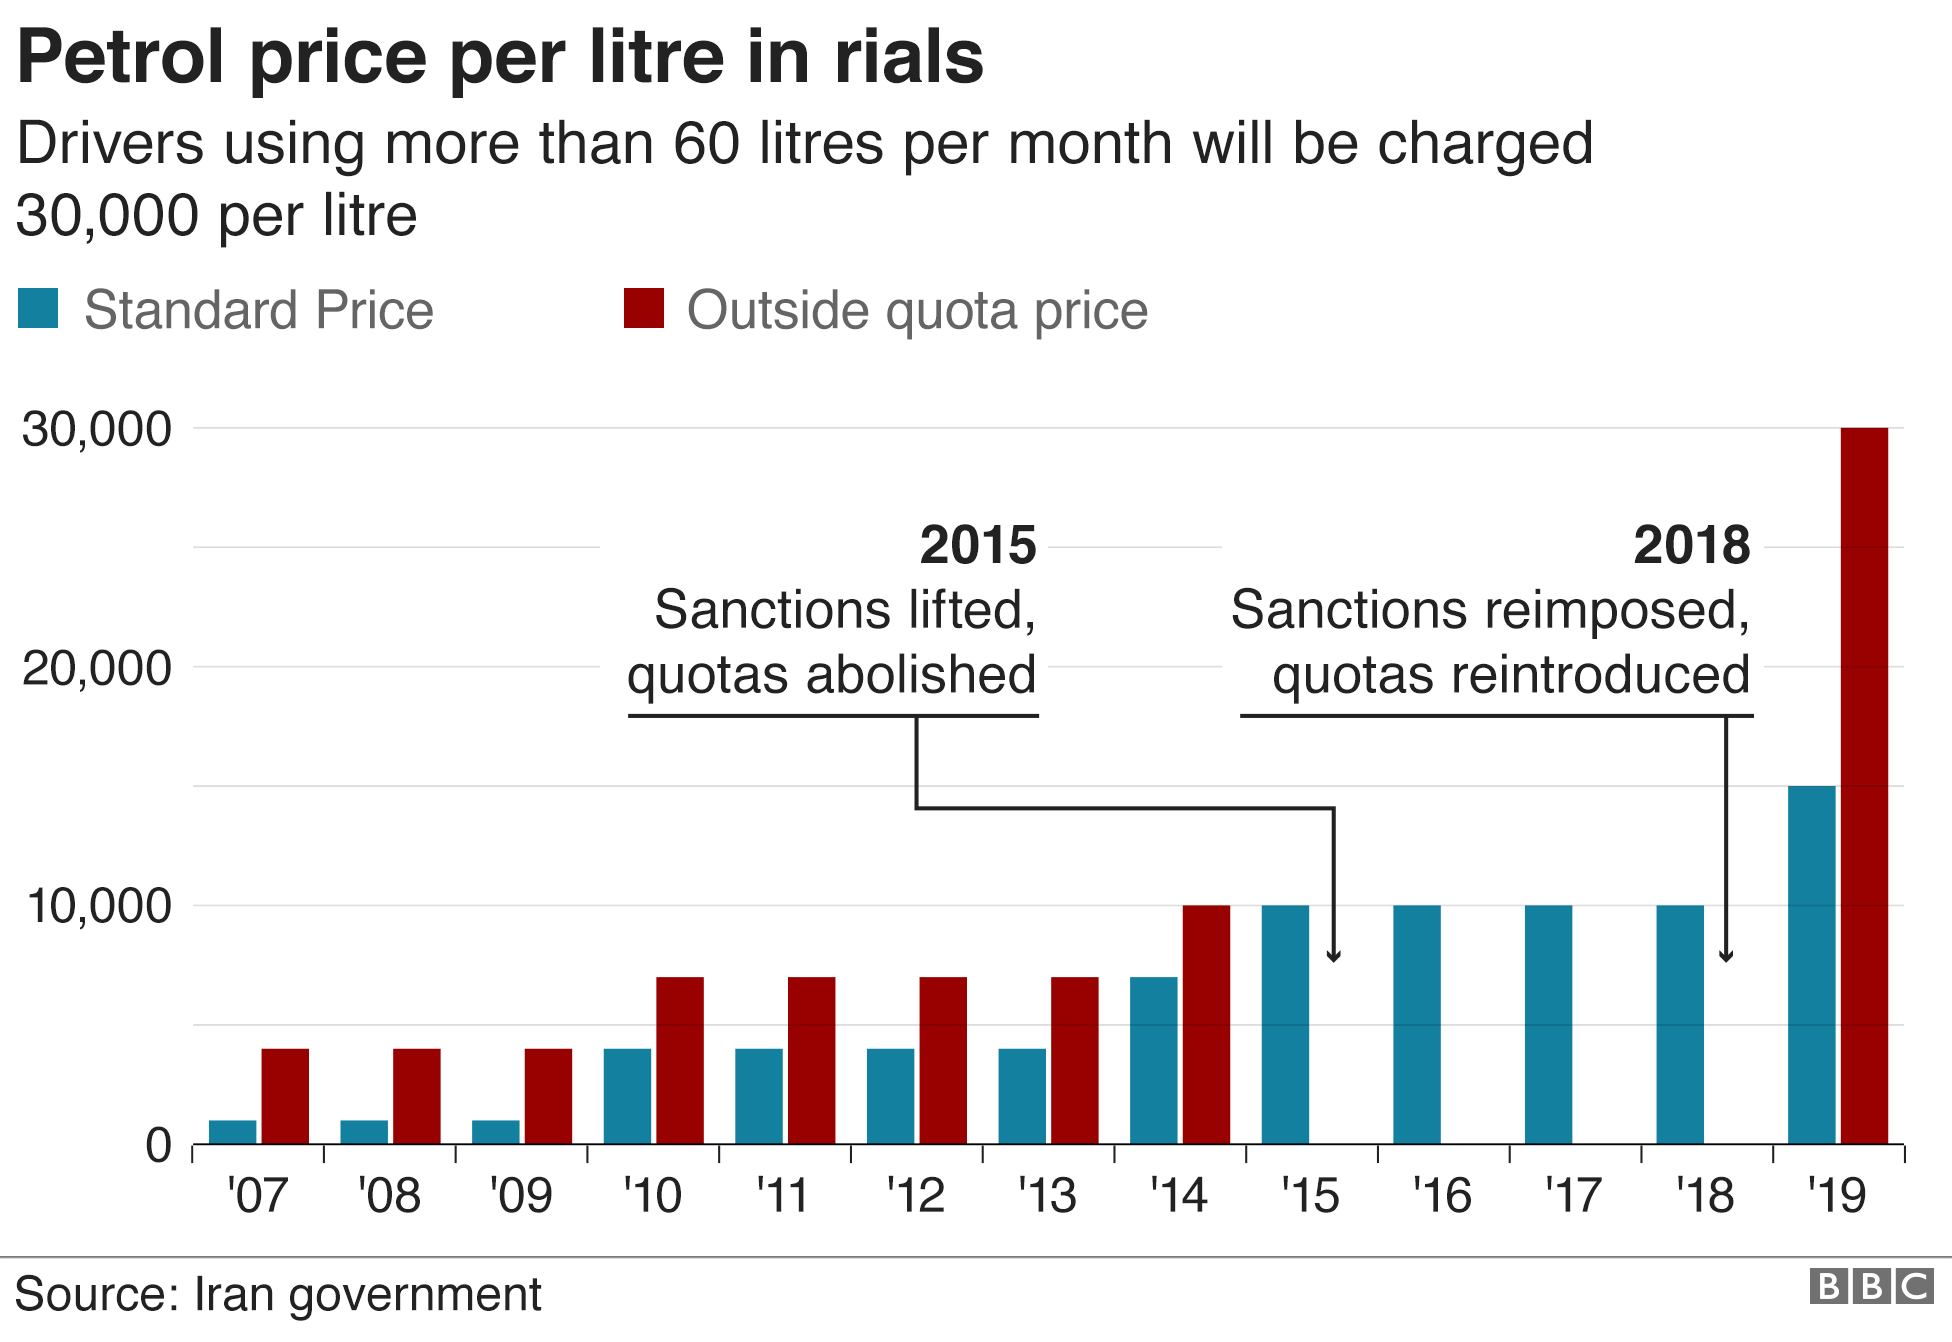 Petrol prices per litre in Iran (November 2019)